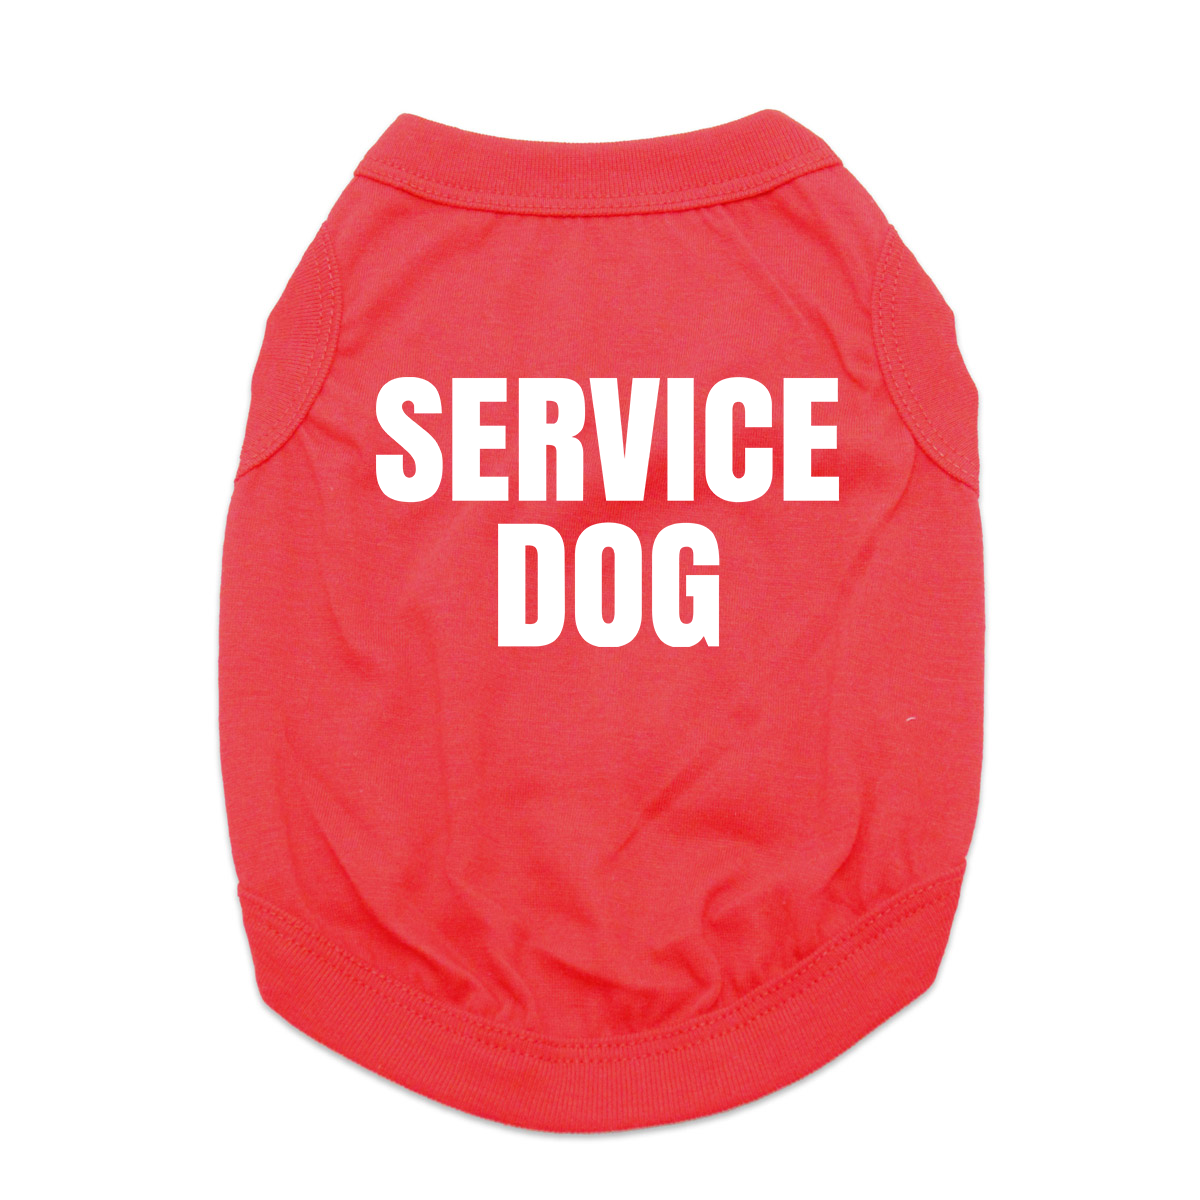 Service Dog Shirt - Red